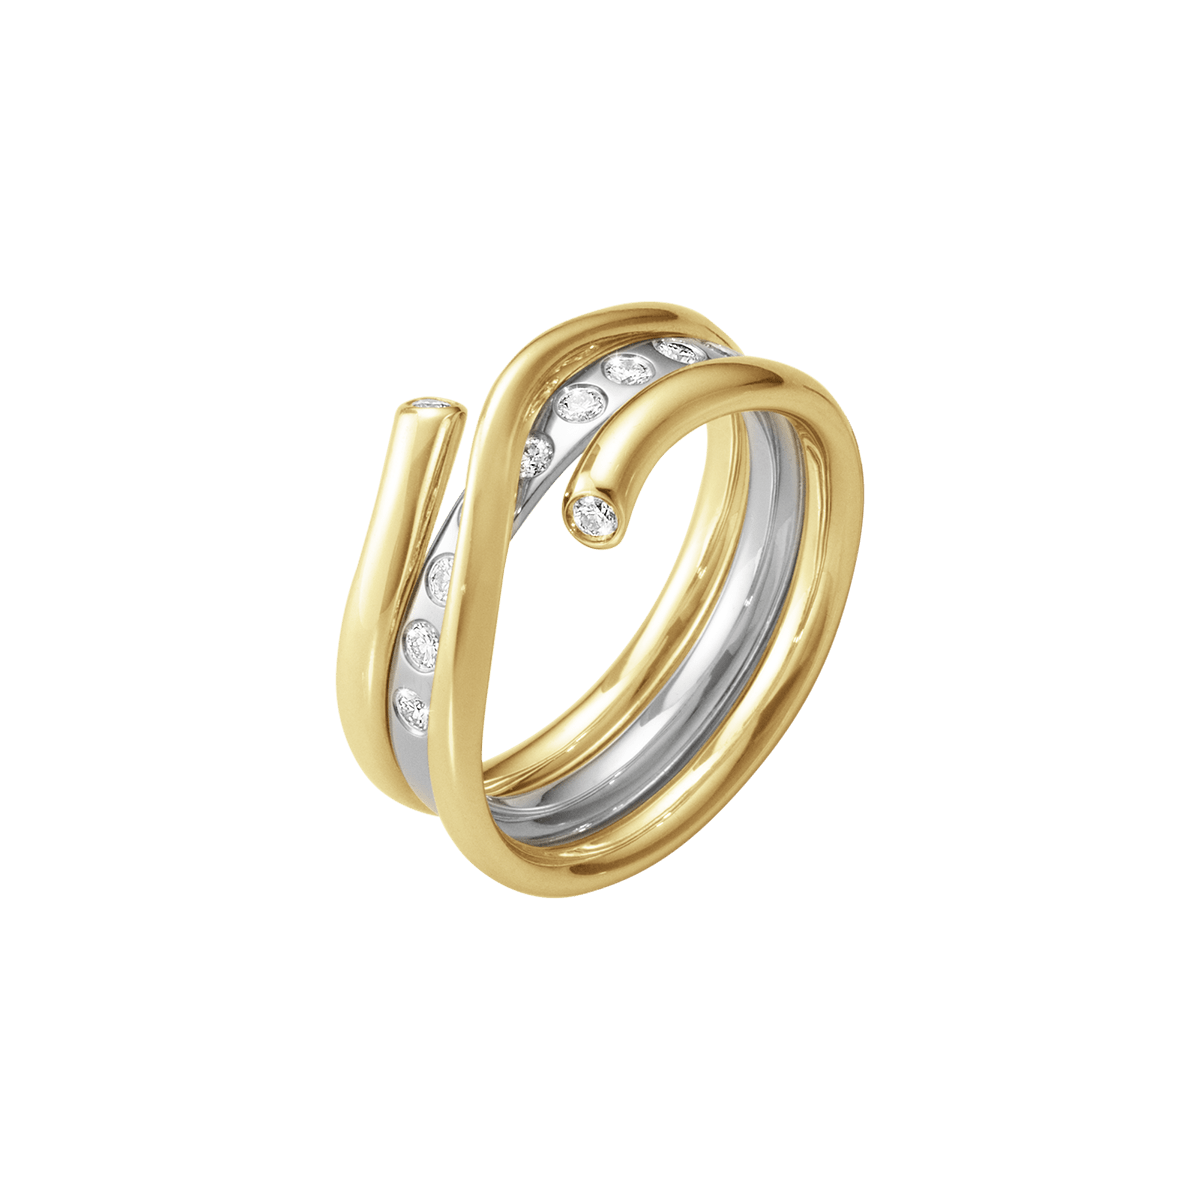 Magic ring combination of silver and gold with diamonds | Georg Jensenダイヤモンド合計015ct寸法